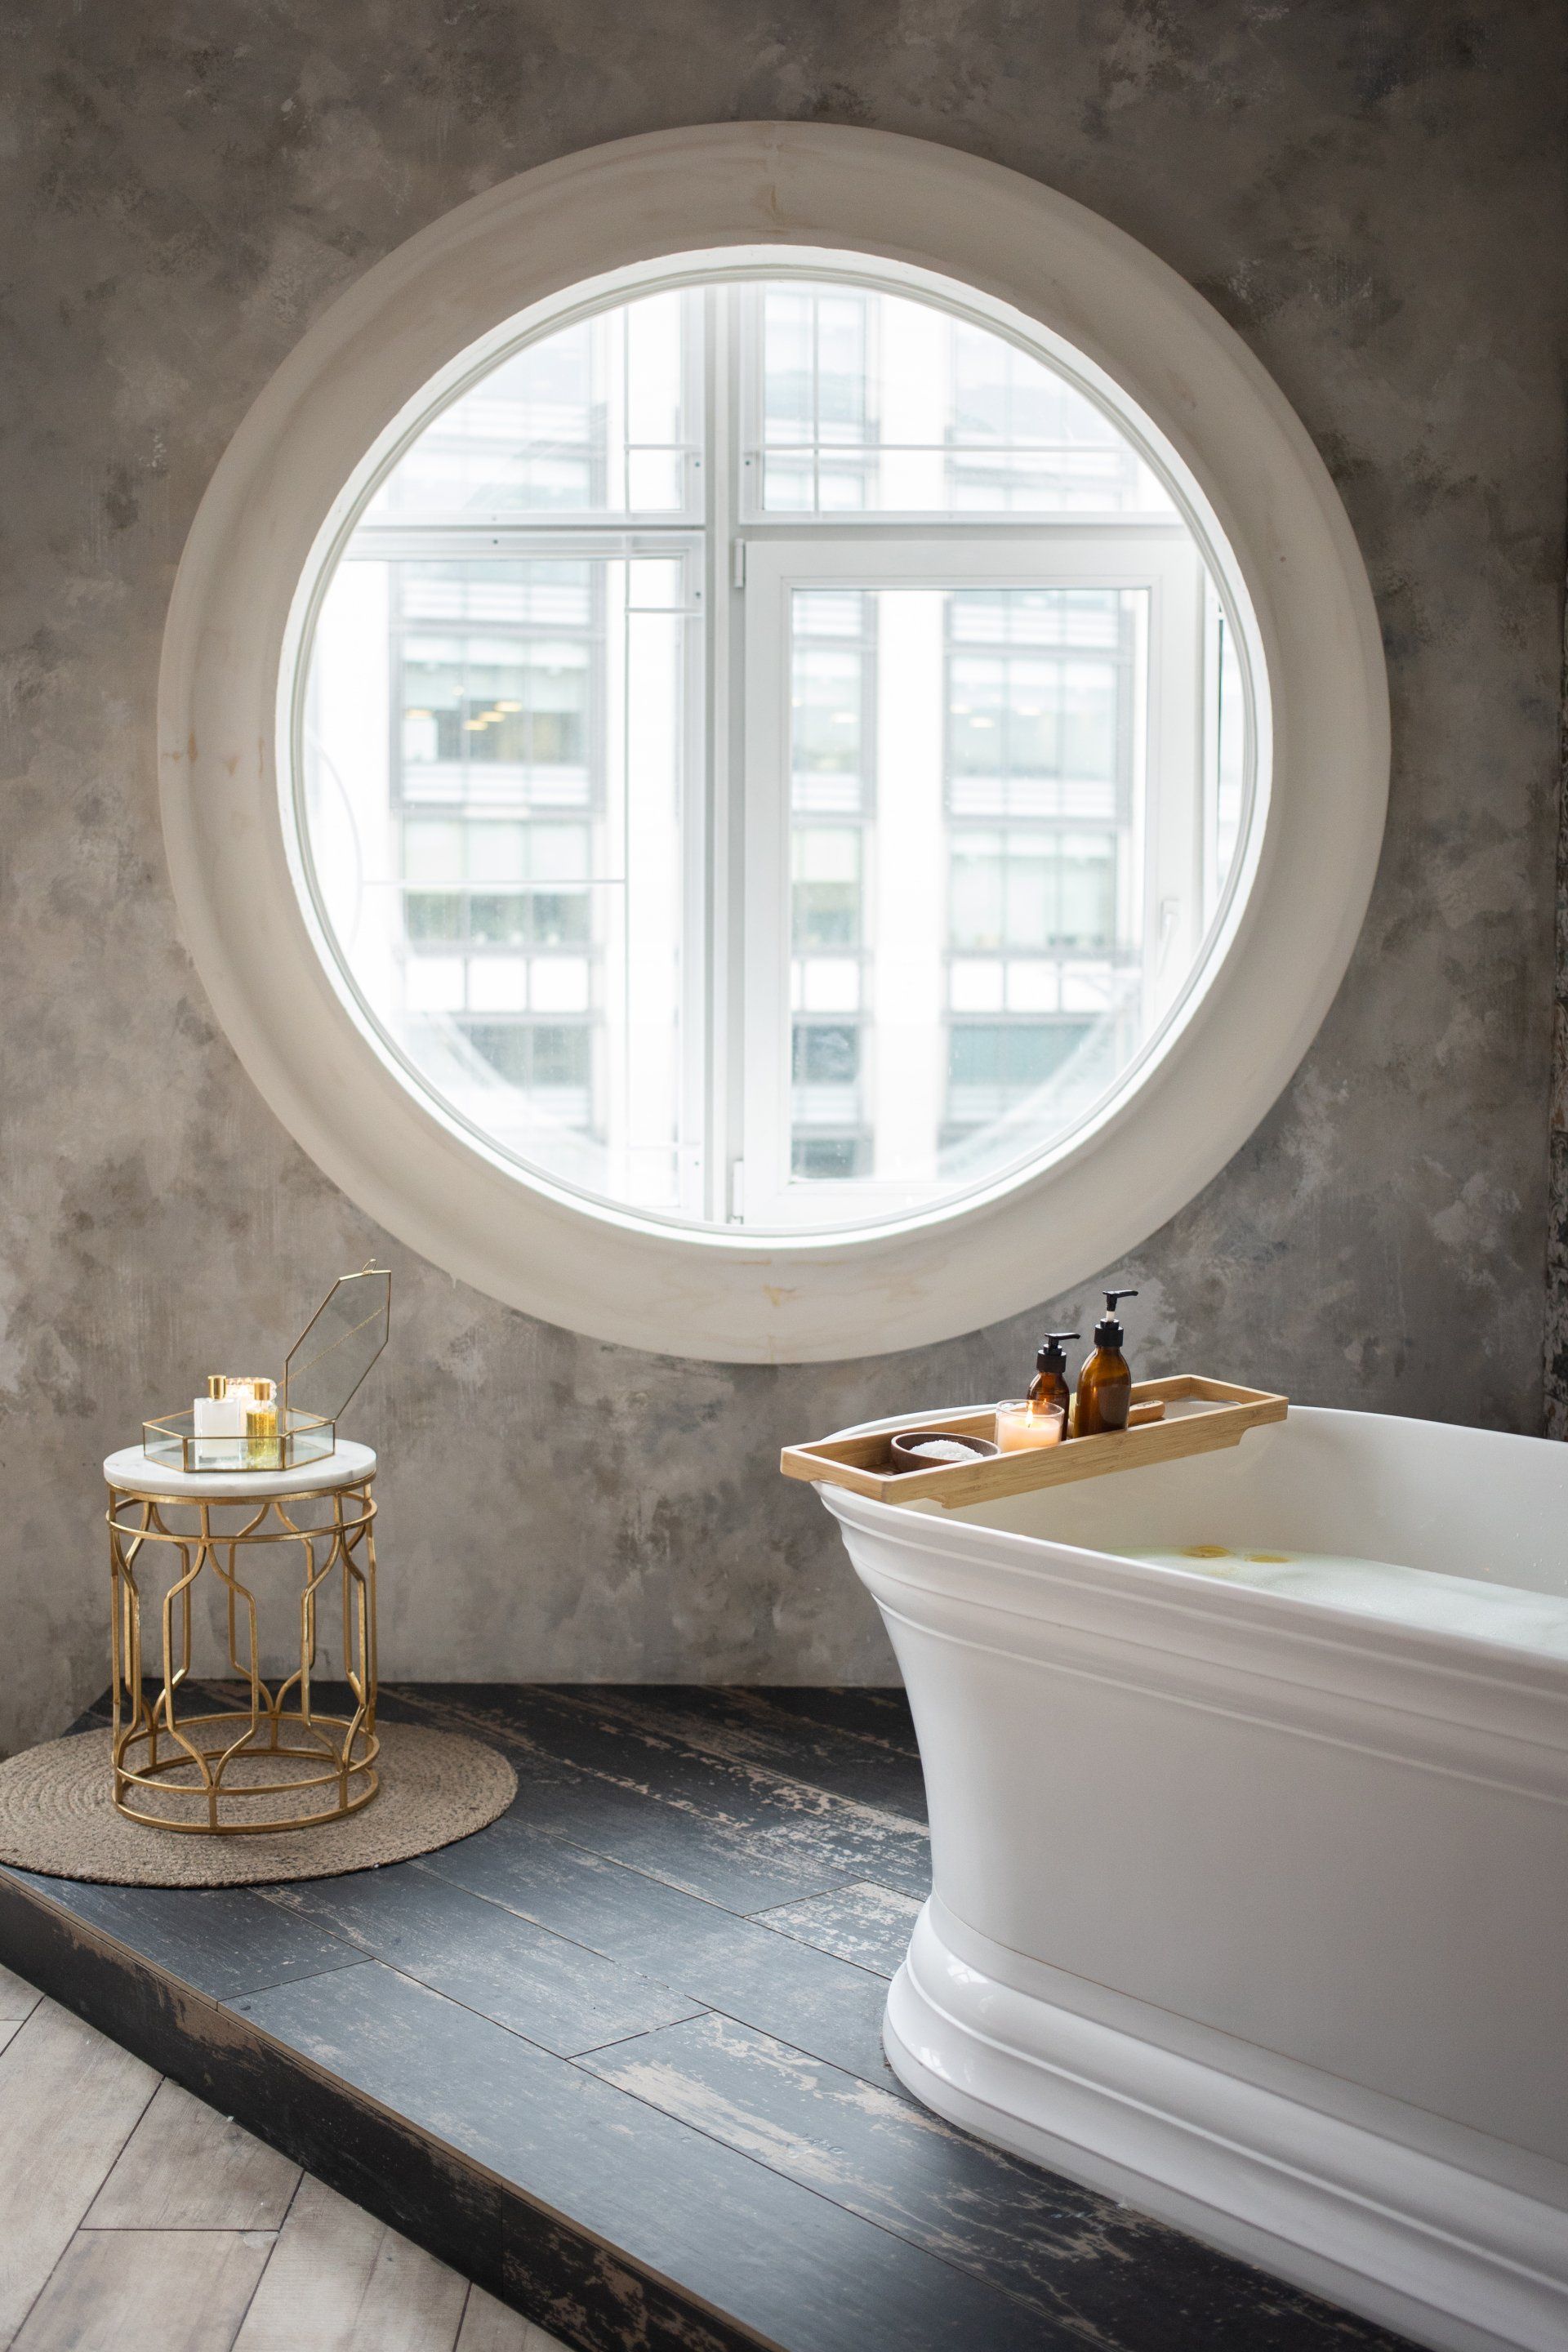 Free-standing bathtub next to circular window